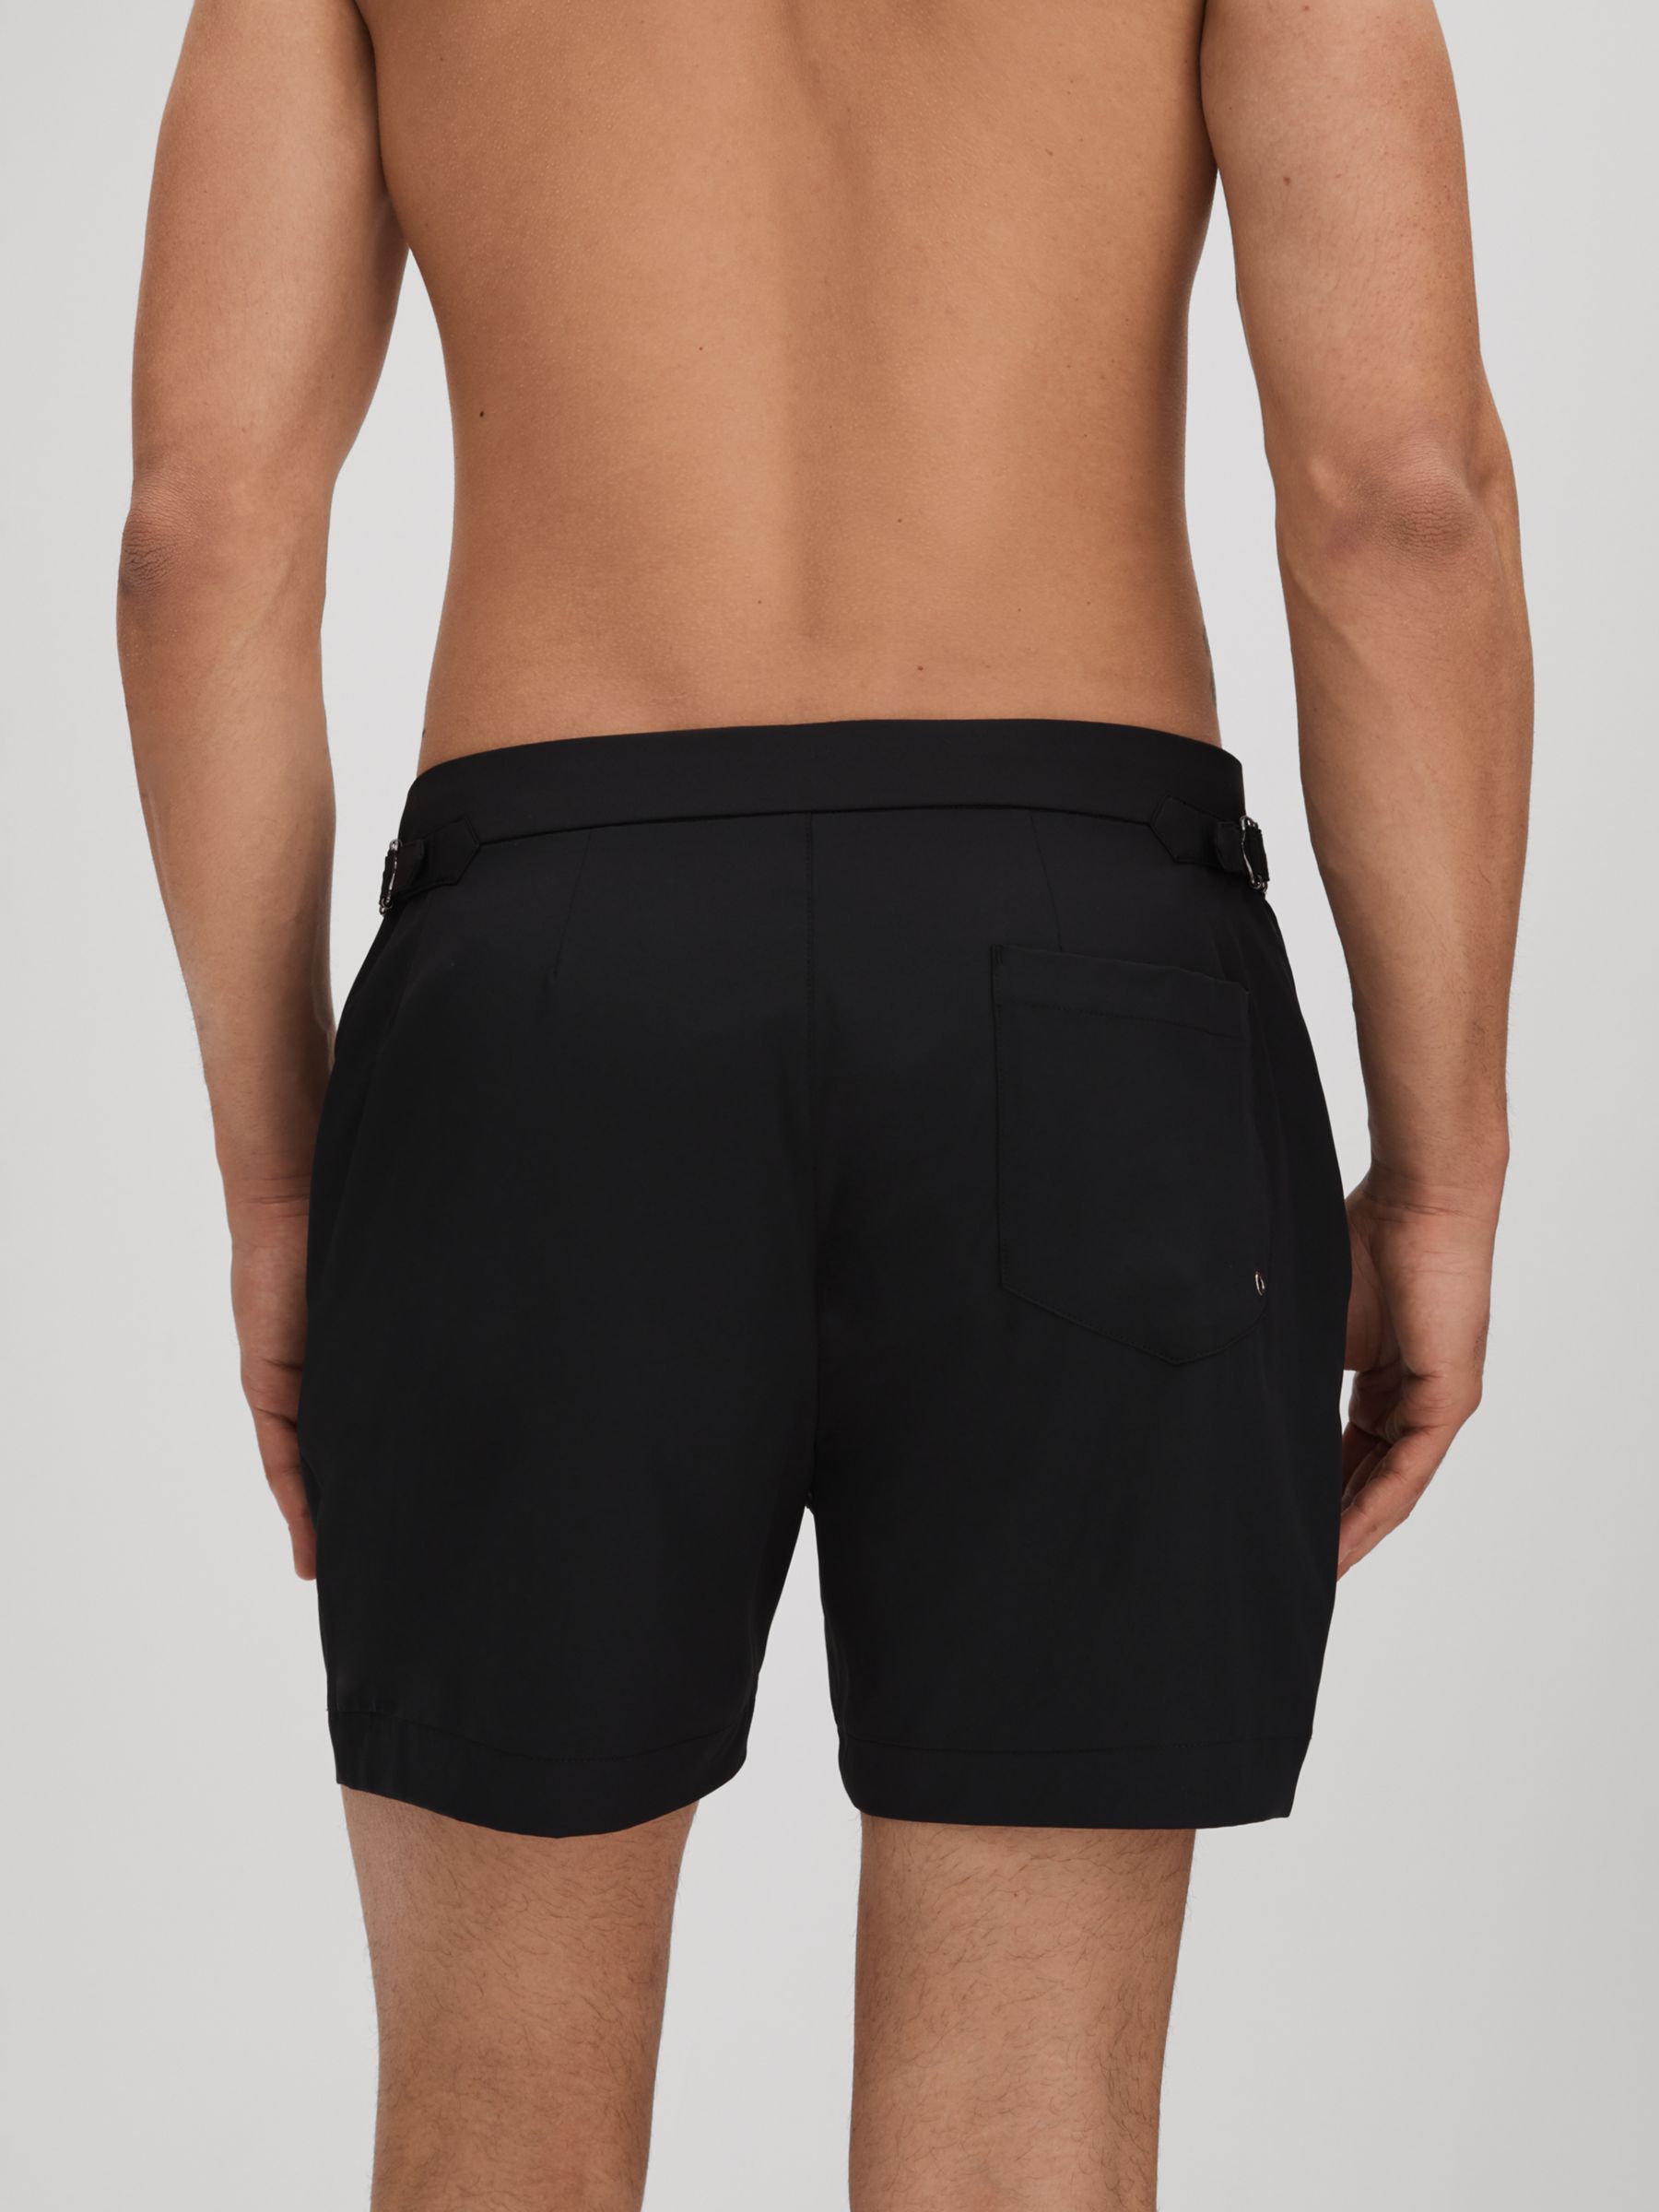 Reiss Sun Plain Swim Shorts, Black, XXL